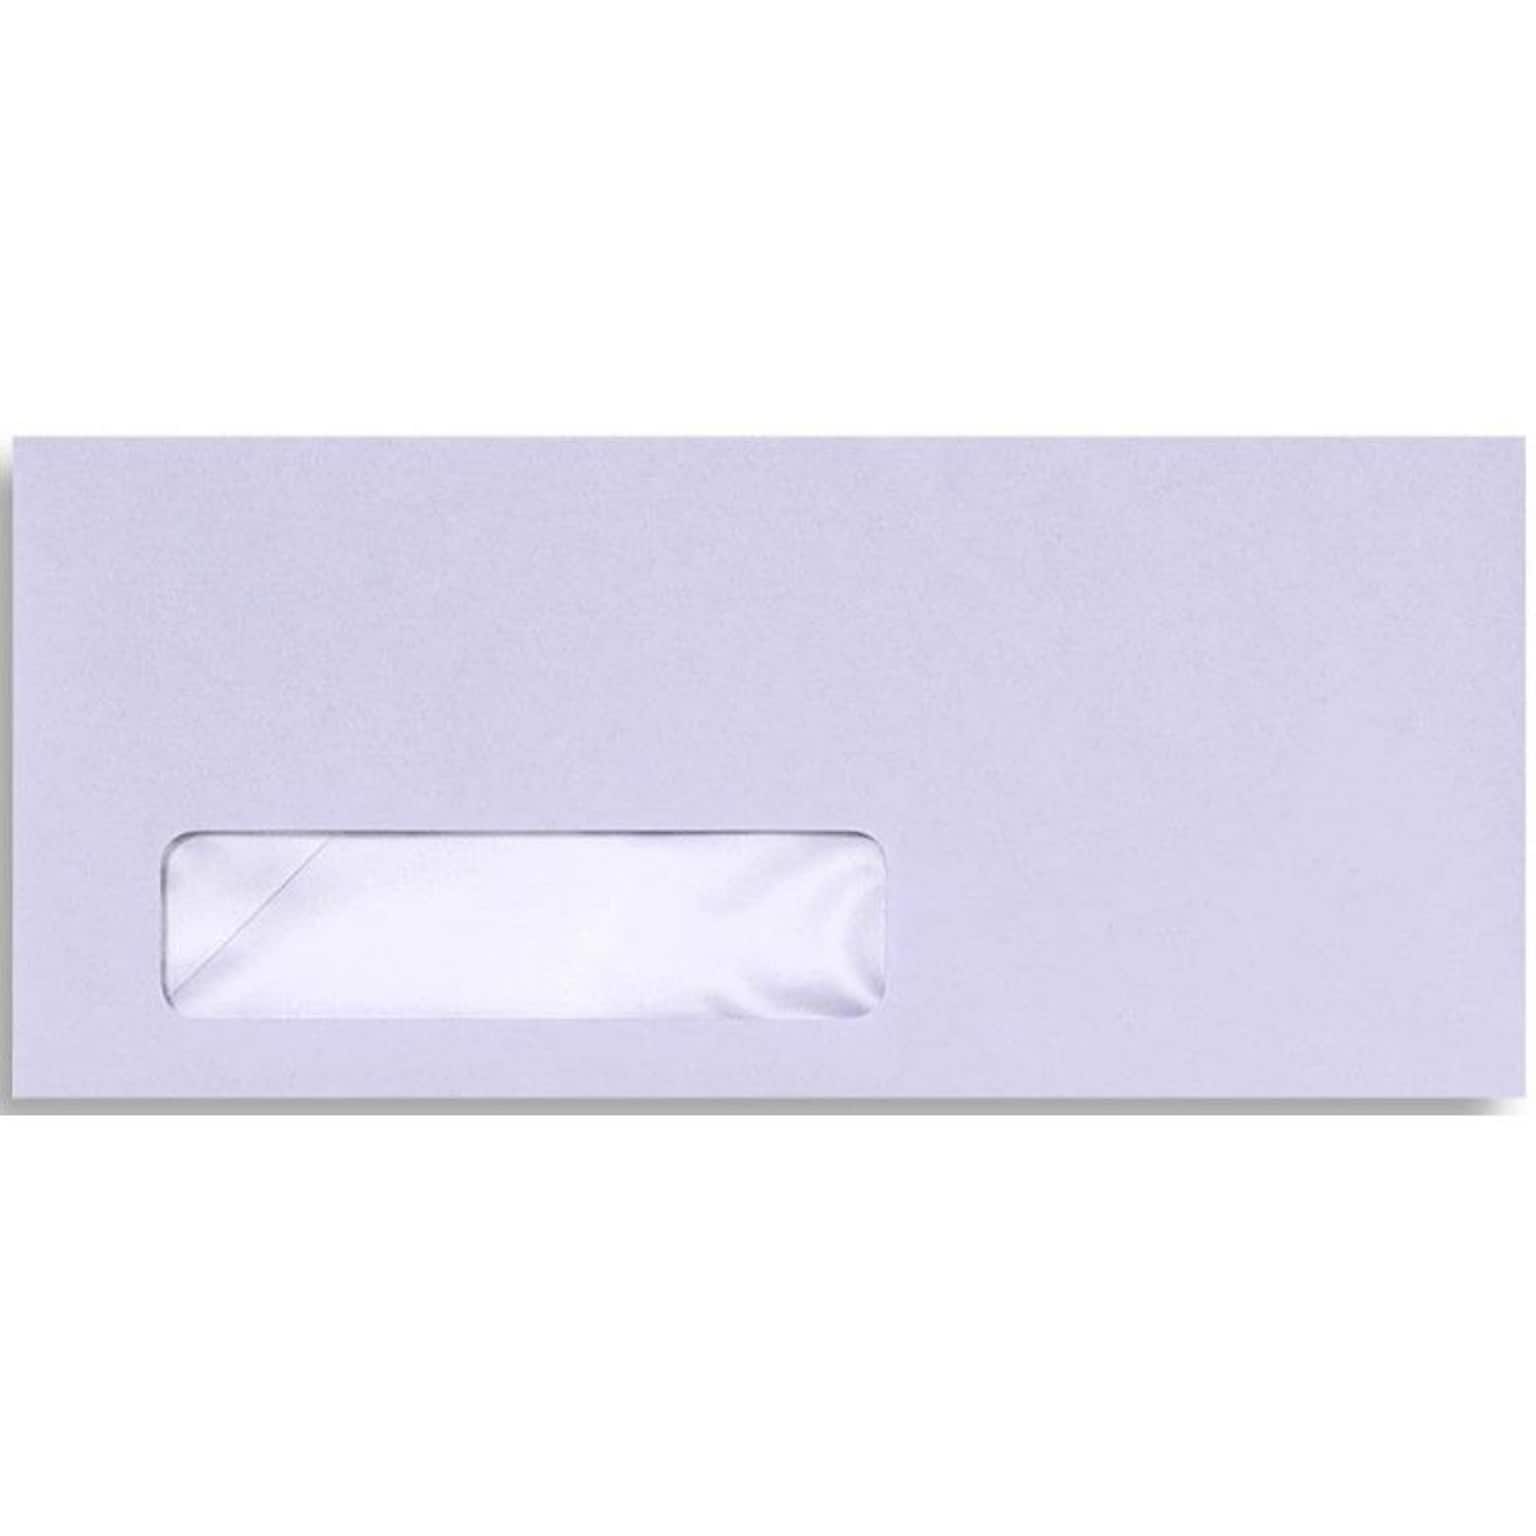 LUX Pastels Moistenable Glue #10 Window Envelope, 4 1/2 x 9 1/2, Orchid Purple, 250/Box (28815-250)